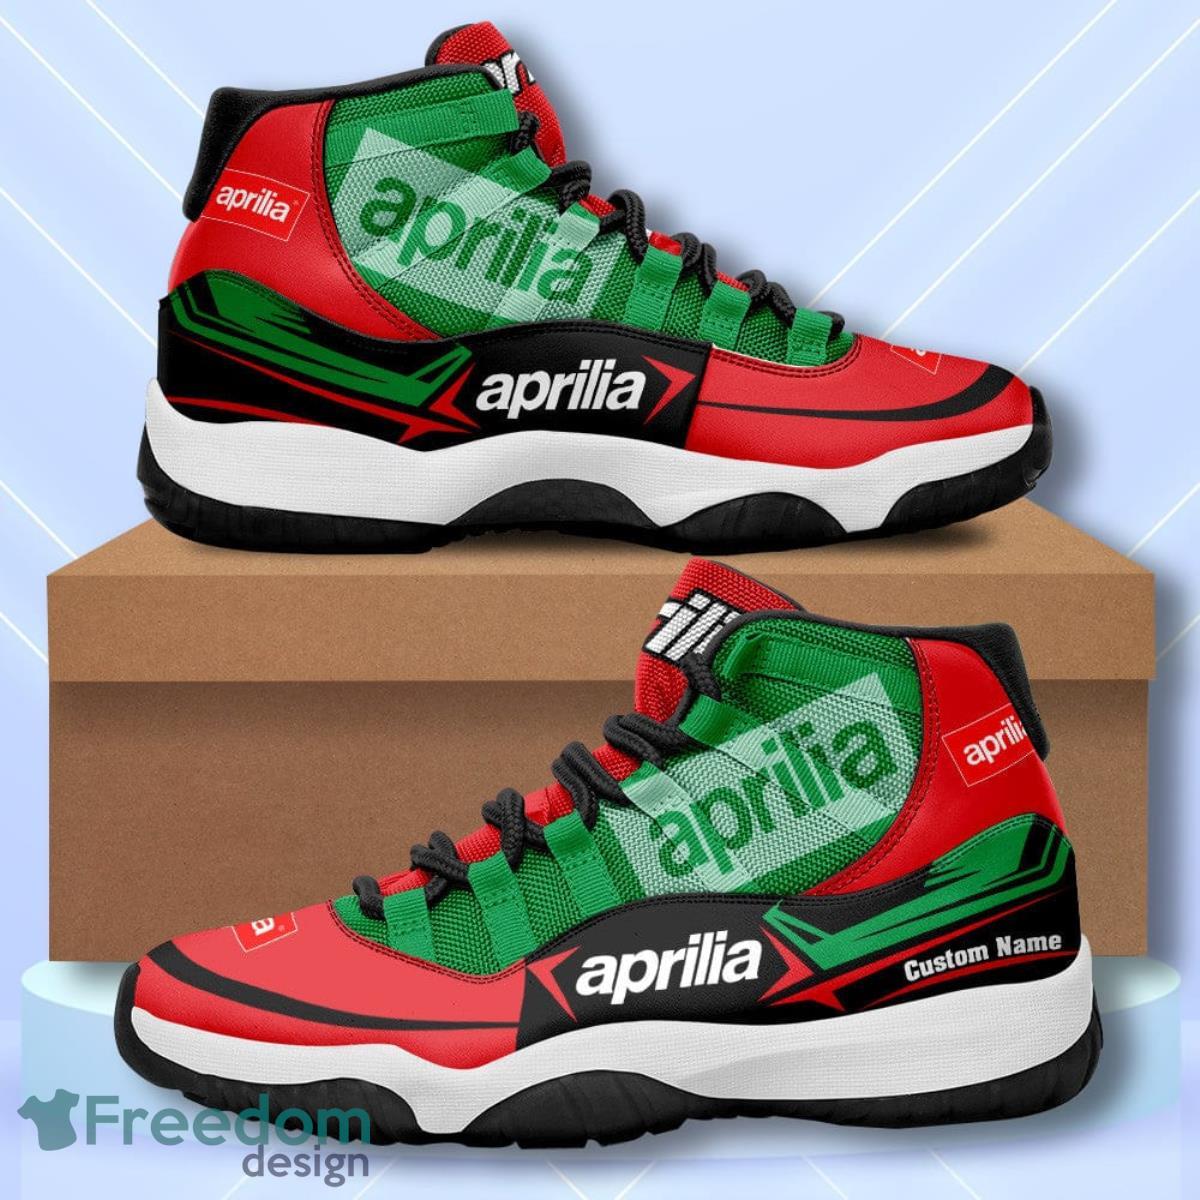 Aprilia Custom Name Air Jordan 11  Sneakers Vintage Shoes Product Photo 1